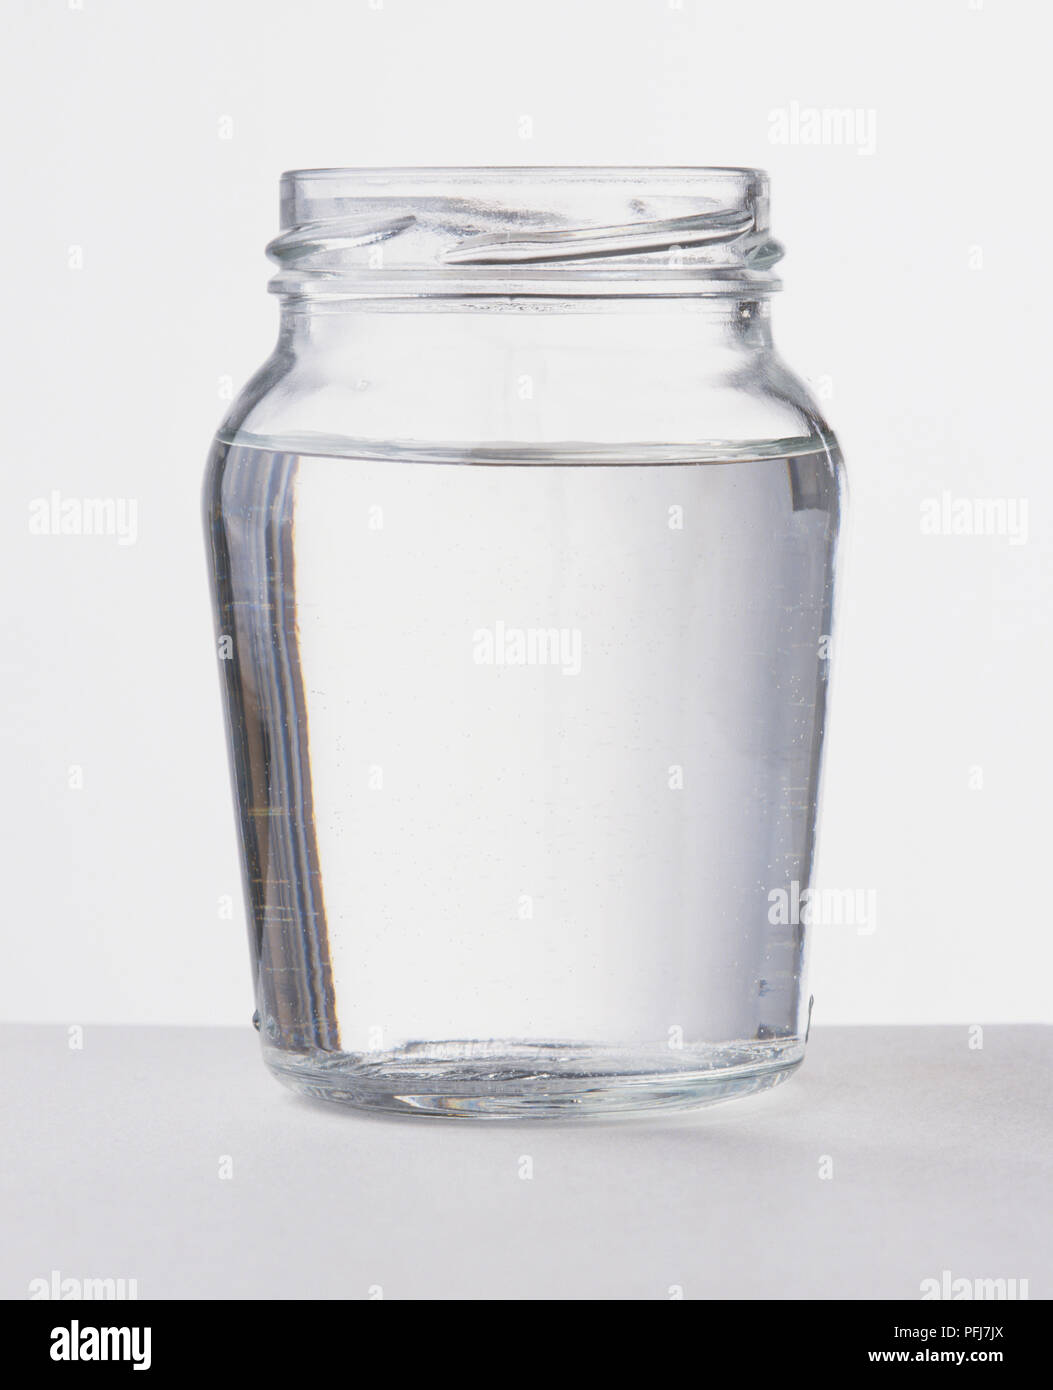 https://c8.alamy.com/comp/PFJ7JX/glass-jar-without-lid-filled-with-water-PFJ7JX.jpg